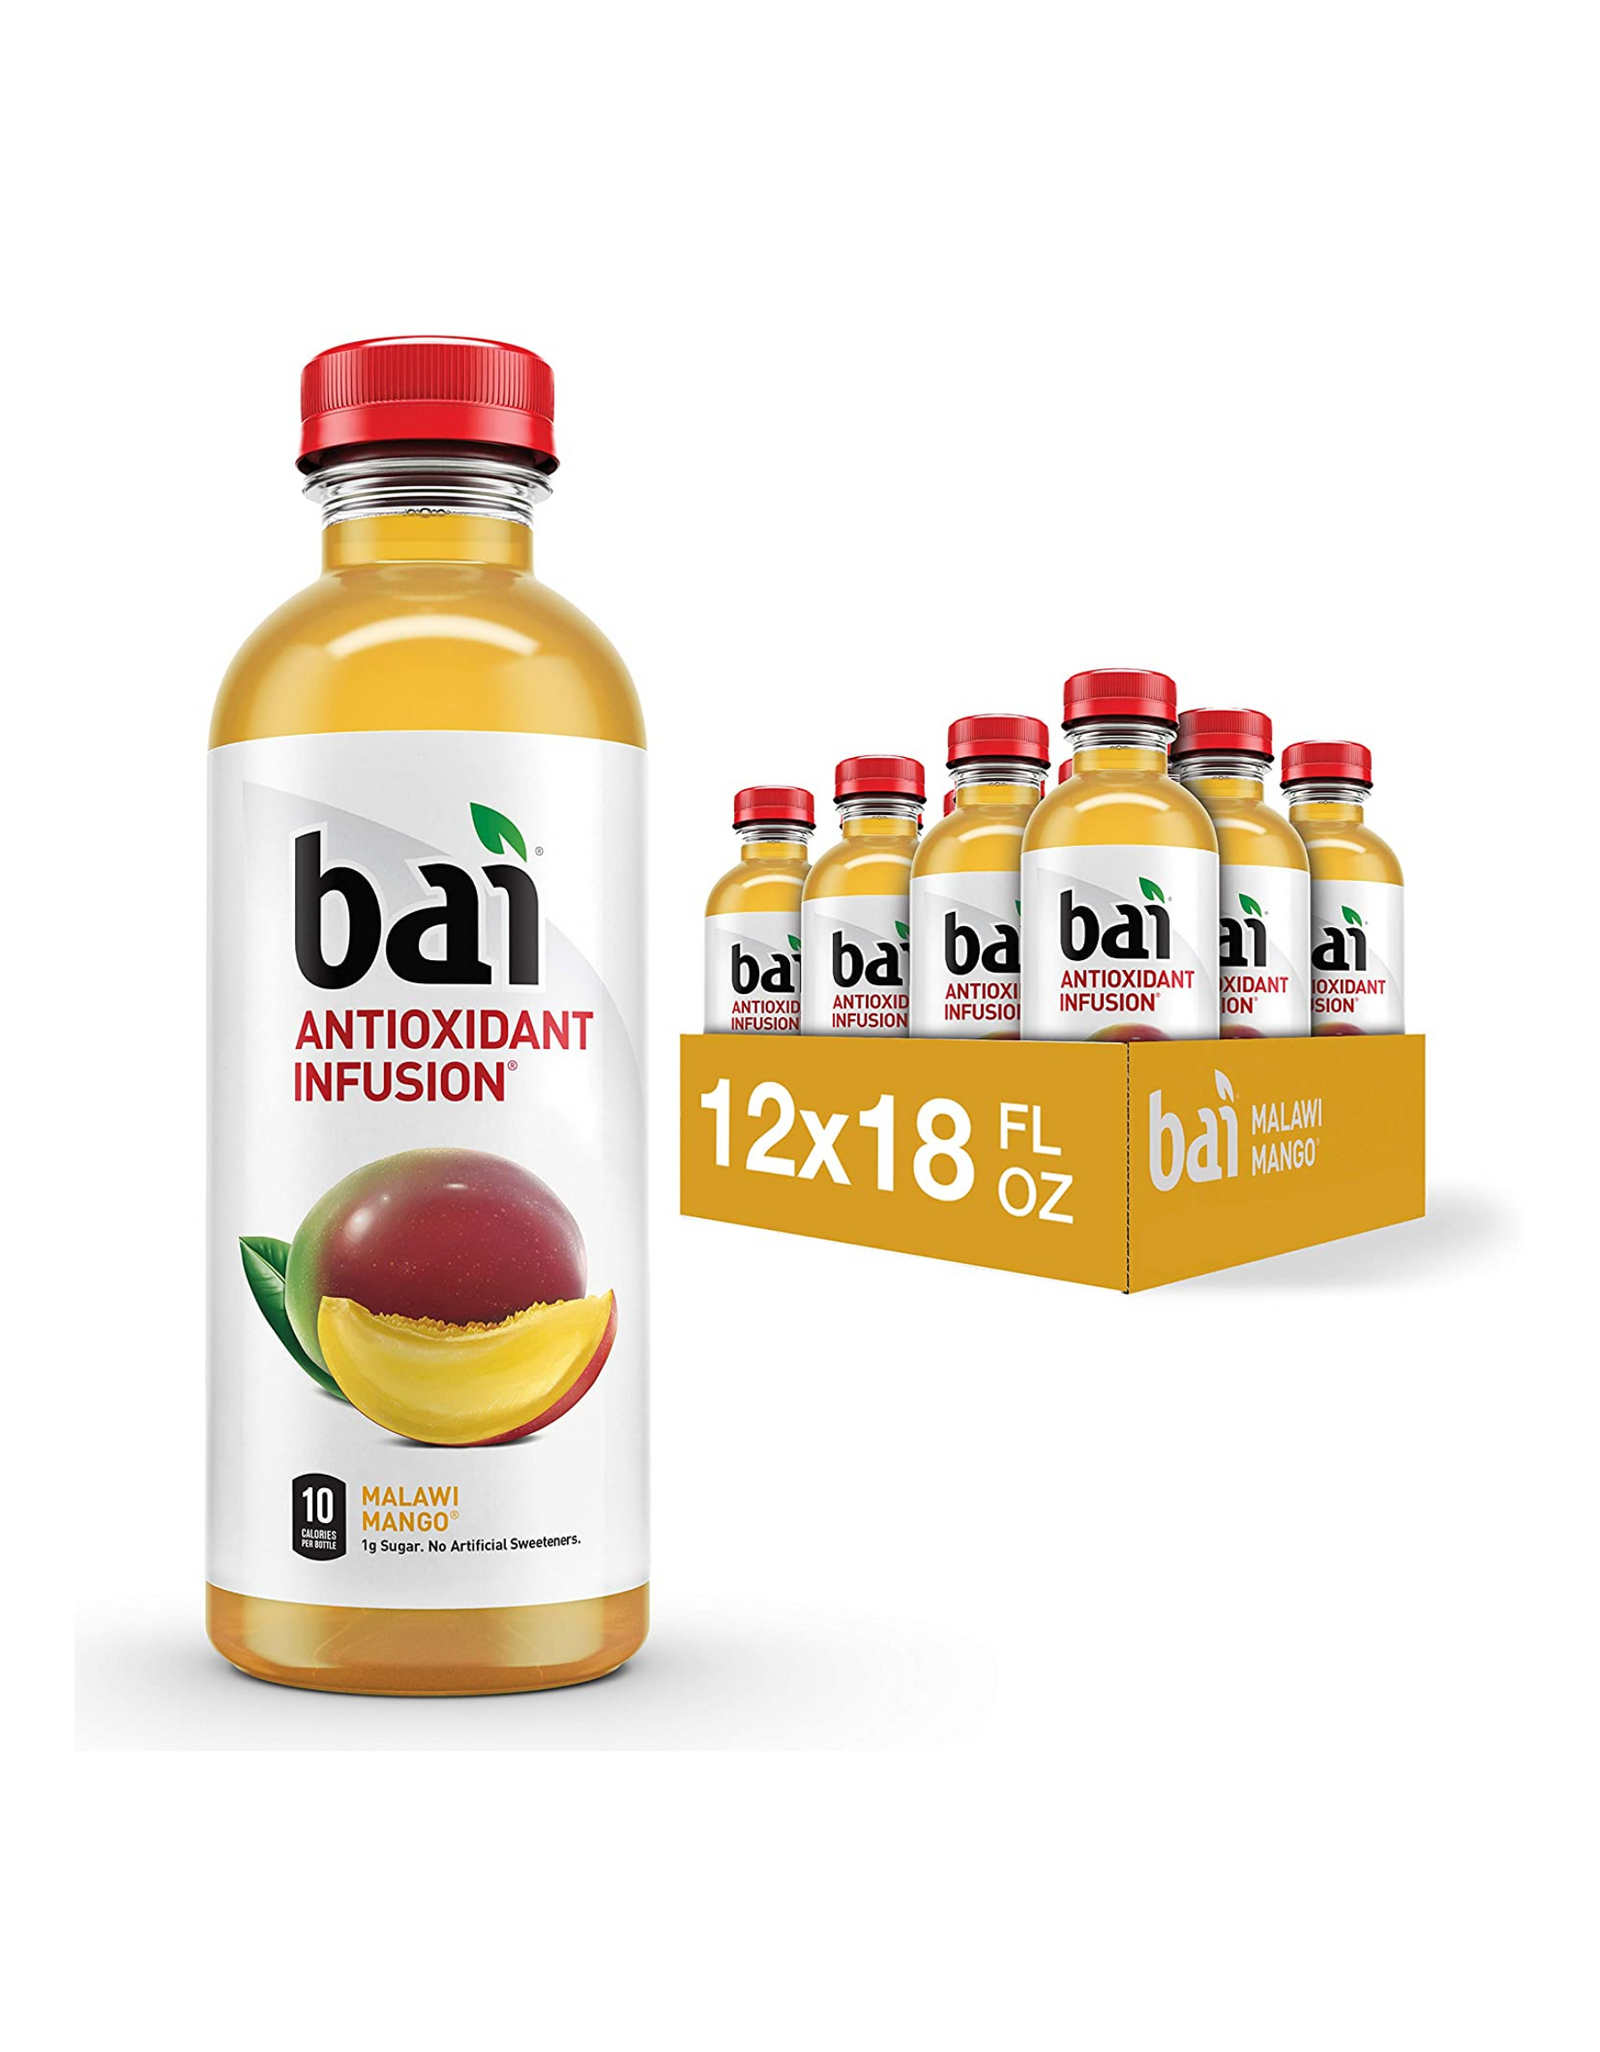 Bai Flavored Water, Antioxidant Infused Drinks, Malawi Mango, 18 fl oz (Pack of 12)